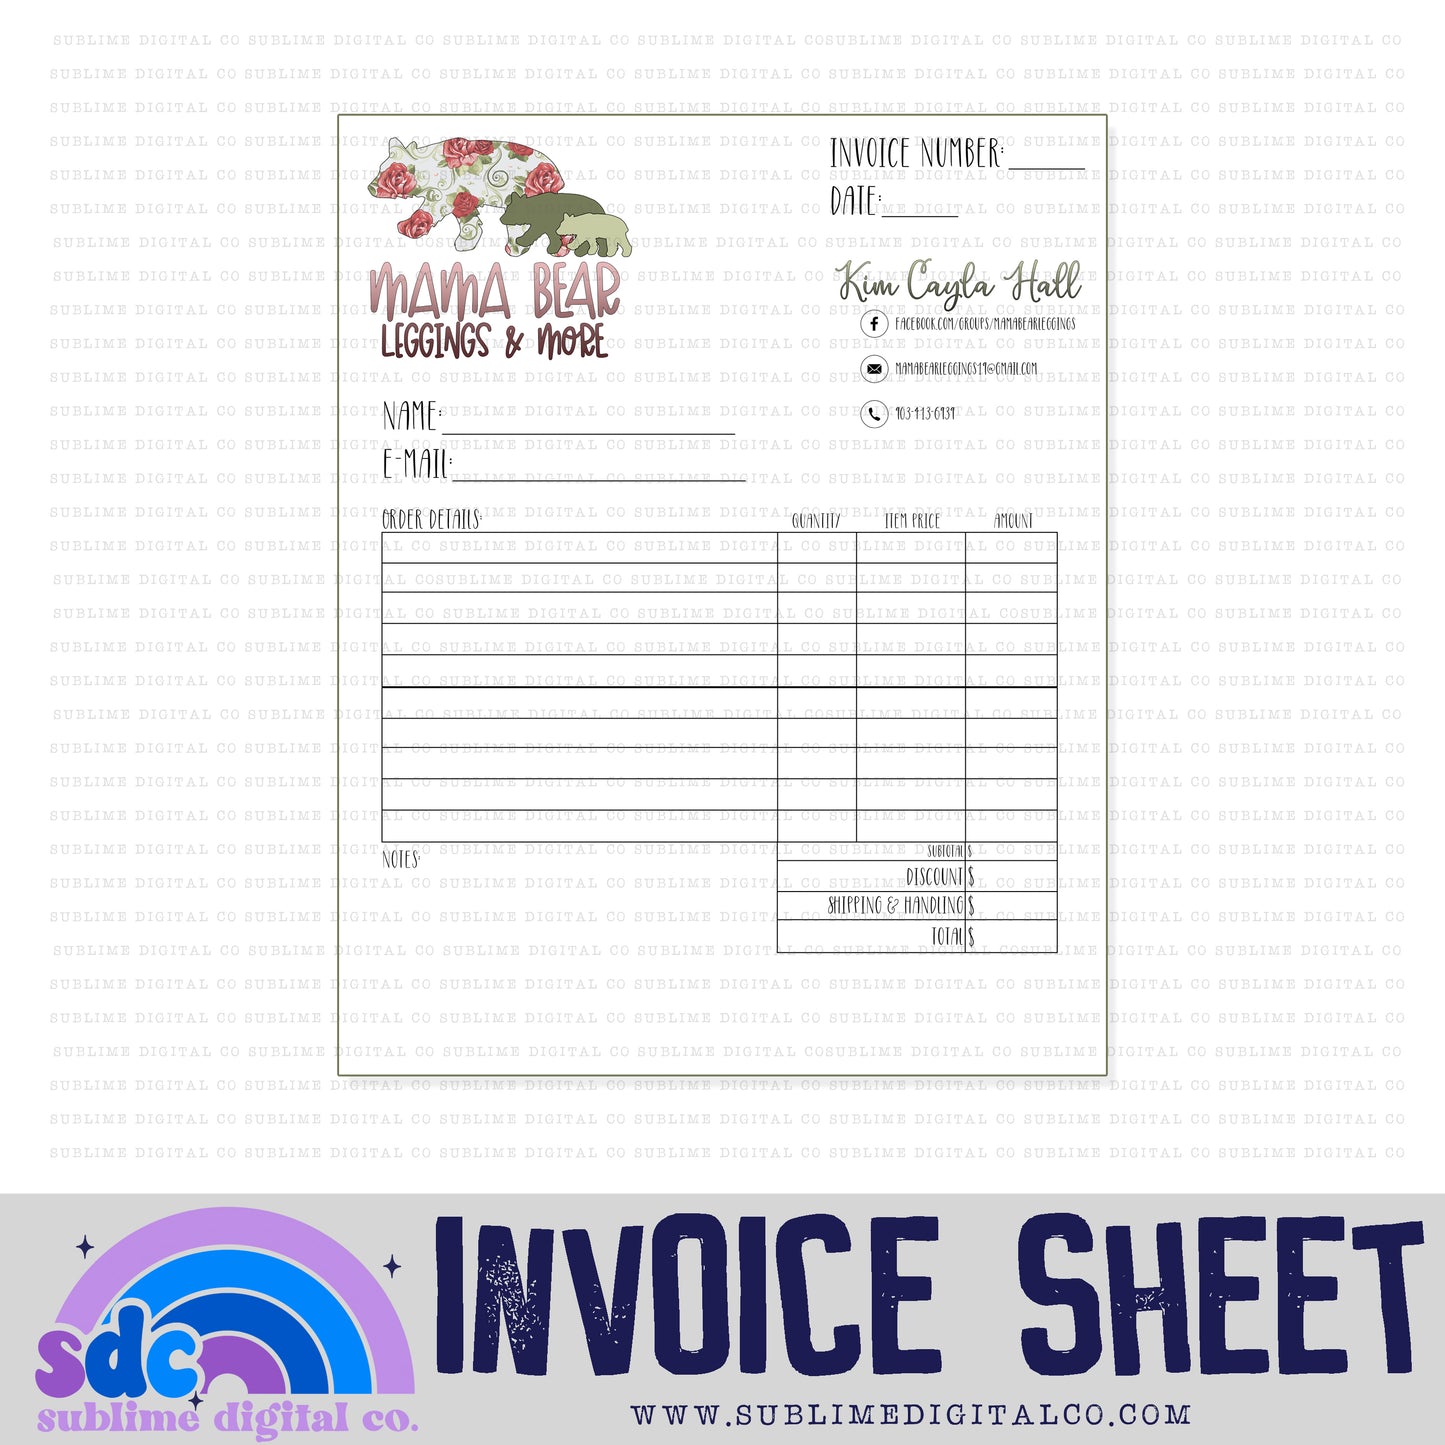 Invoice Sheet with Logo Design • Business Branding • Custom Digital Designs